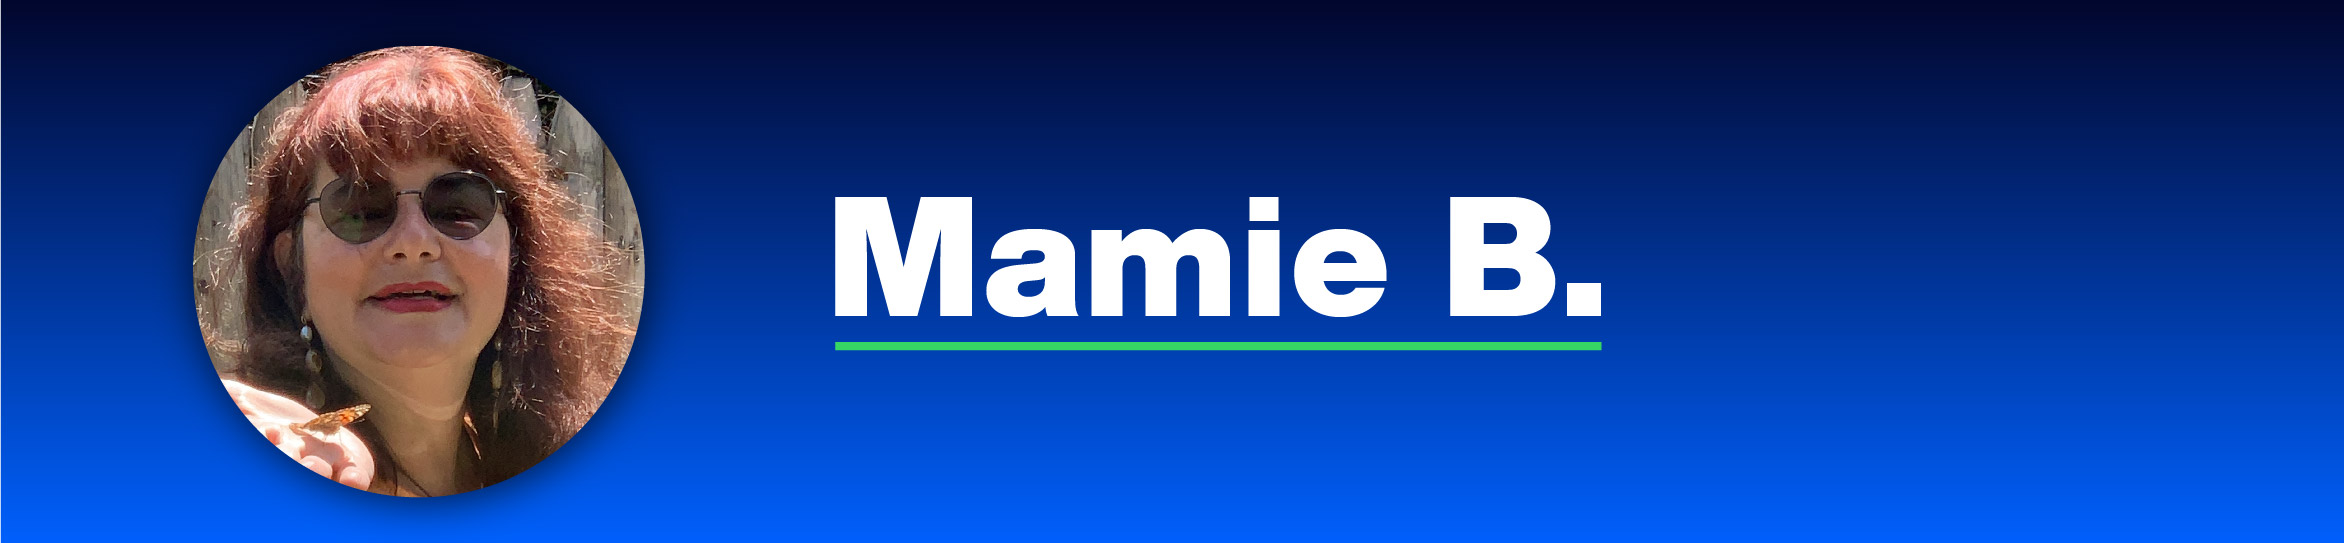 Mamie_B_Member_Story-01.jpg